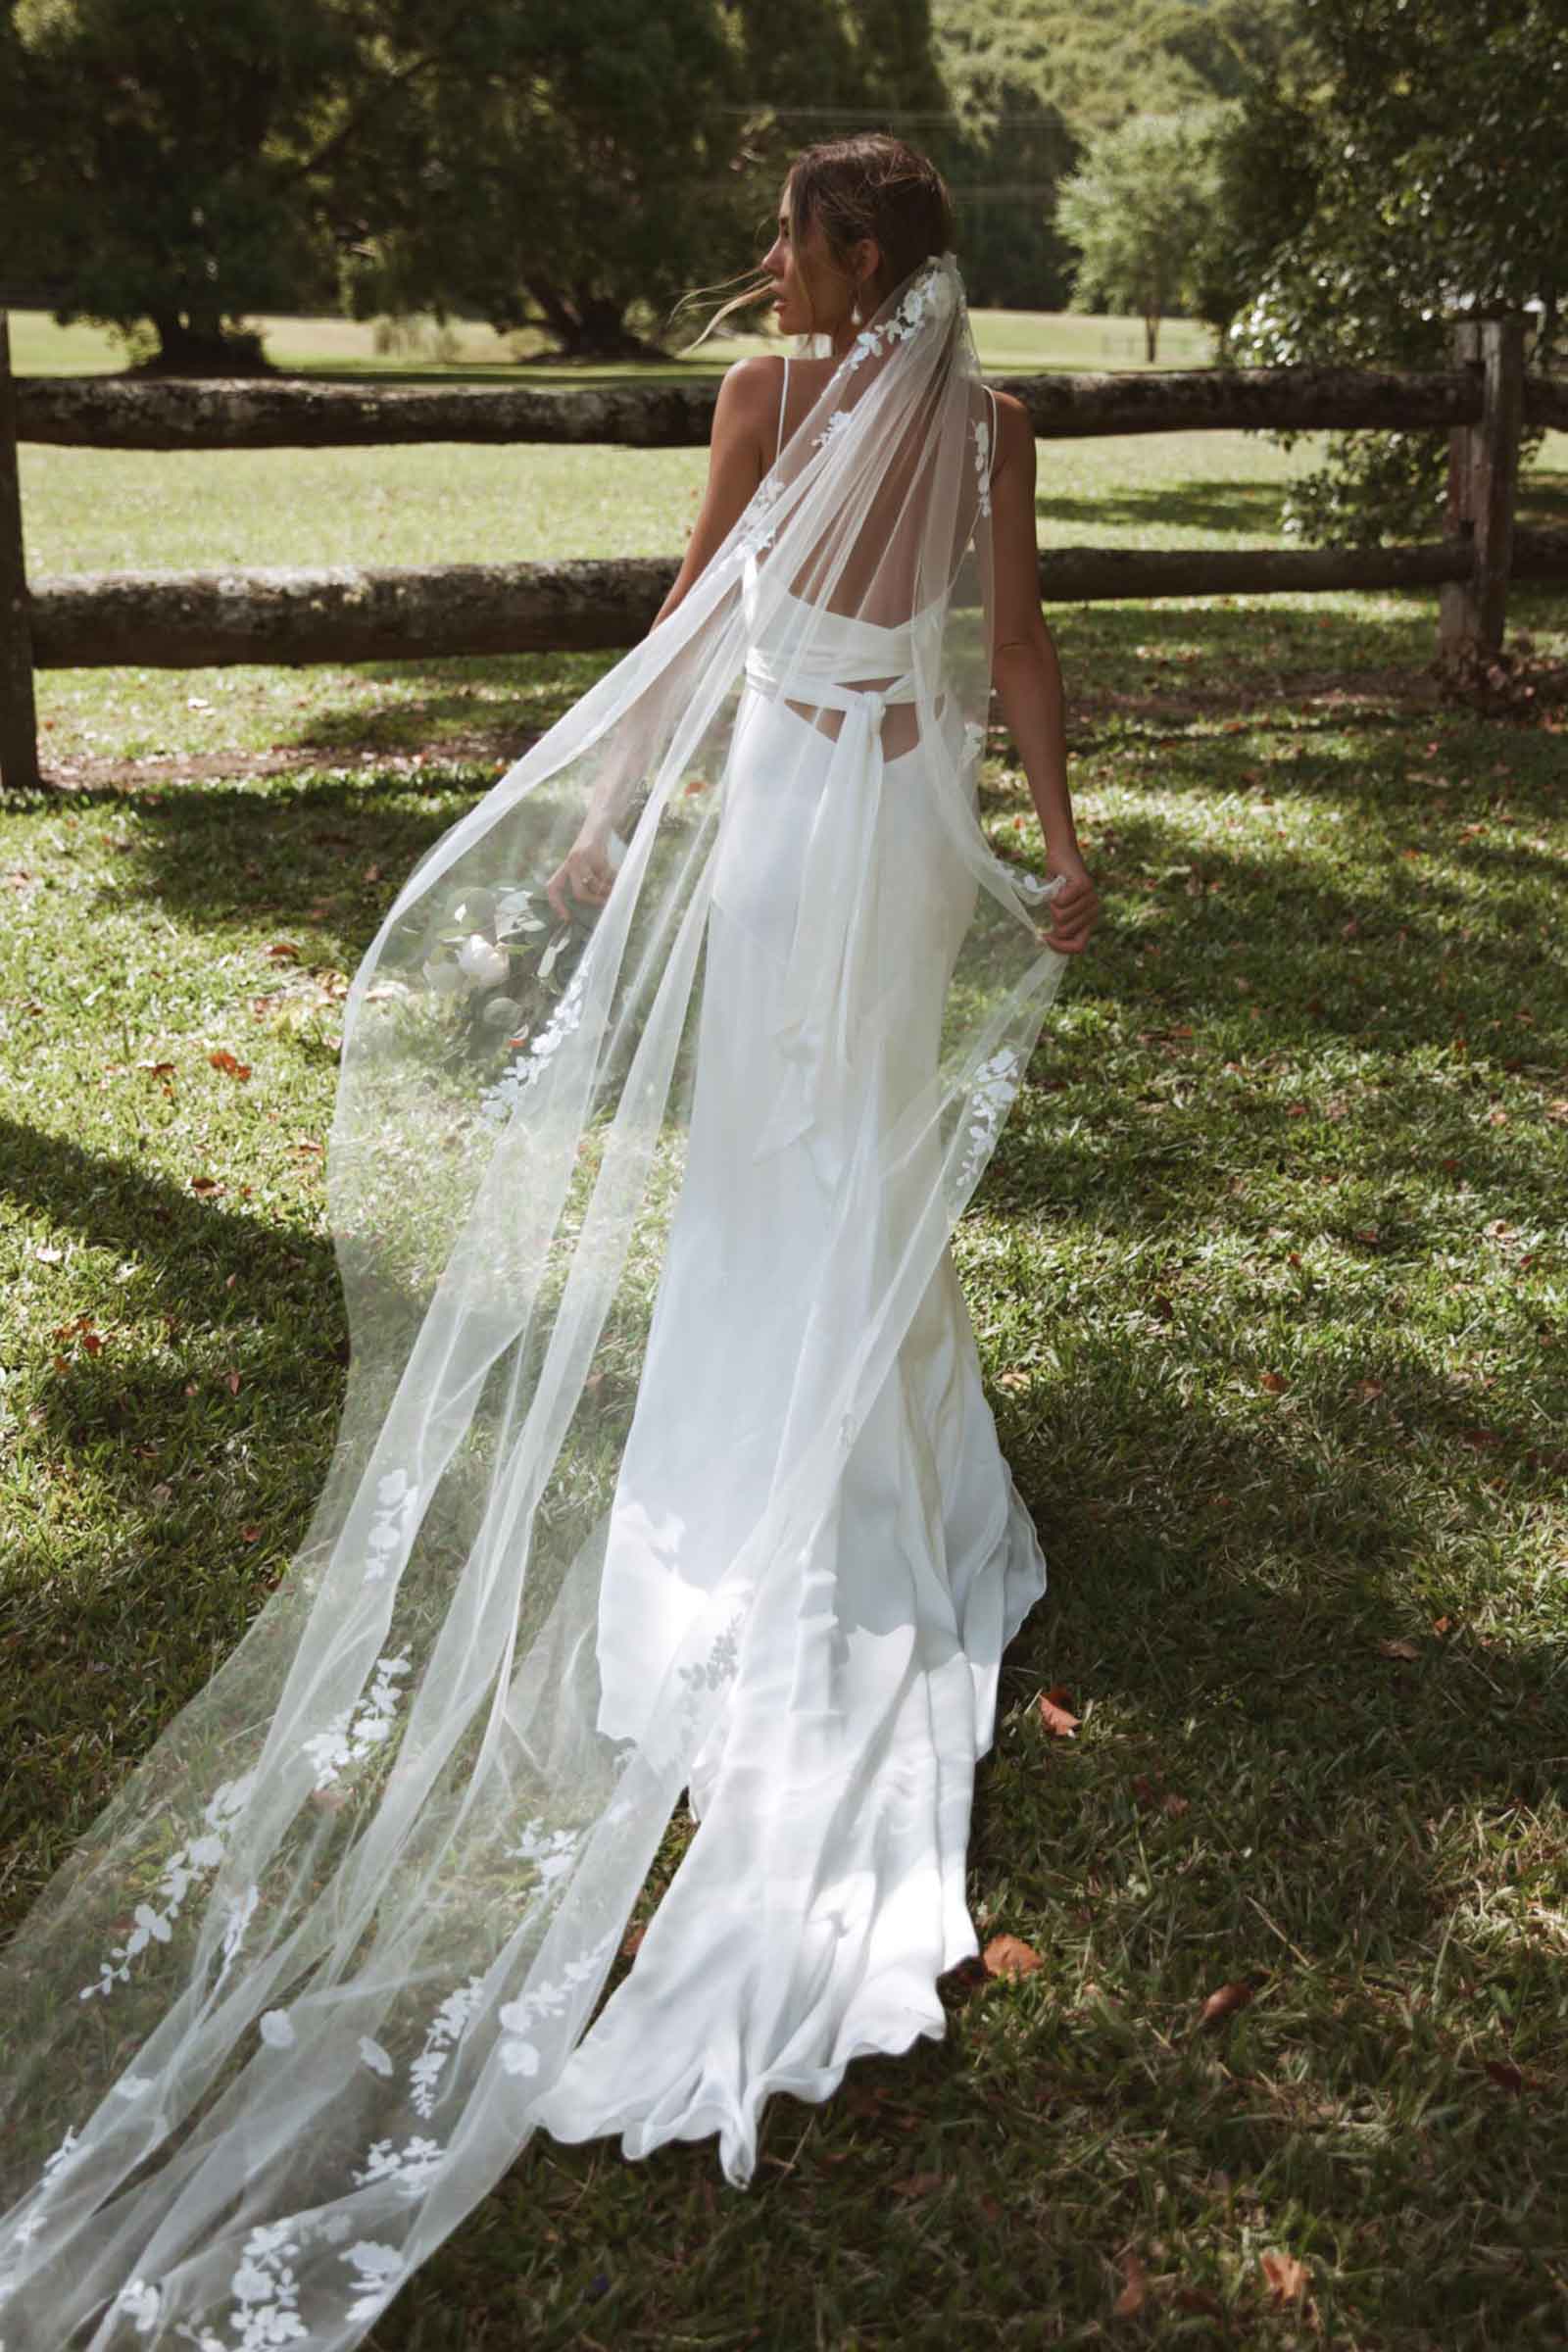 Lipsy lace with embellished maxi bridal dress, Ivory